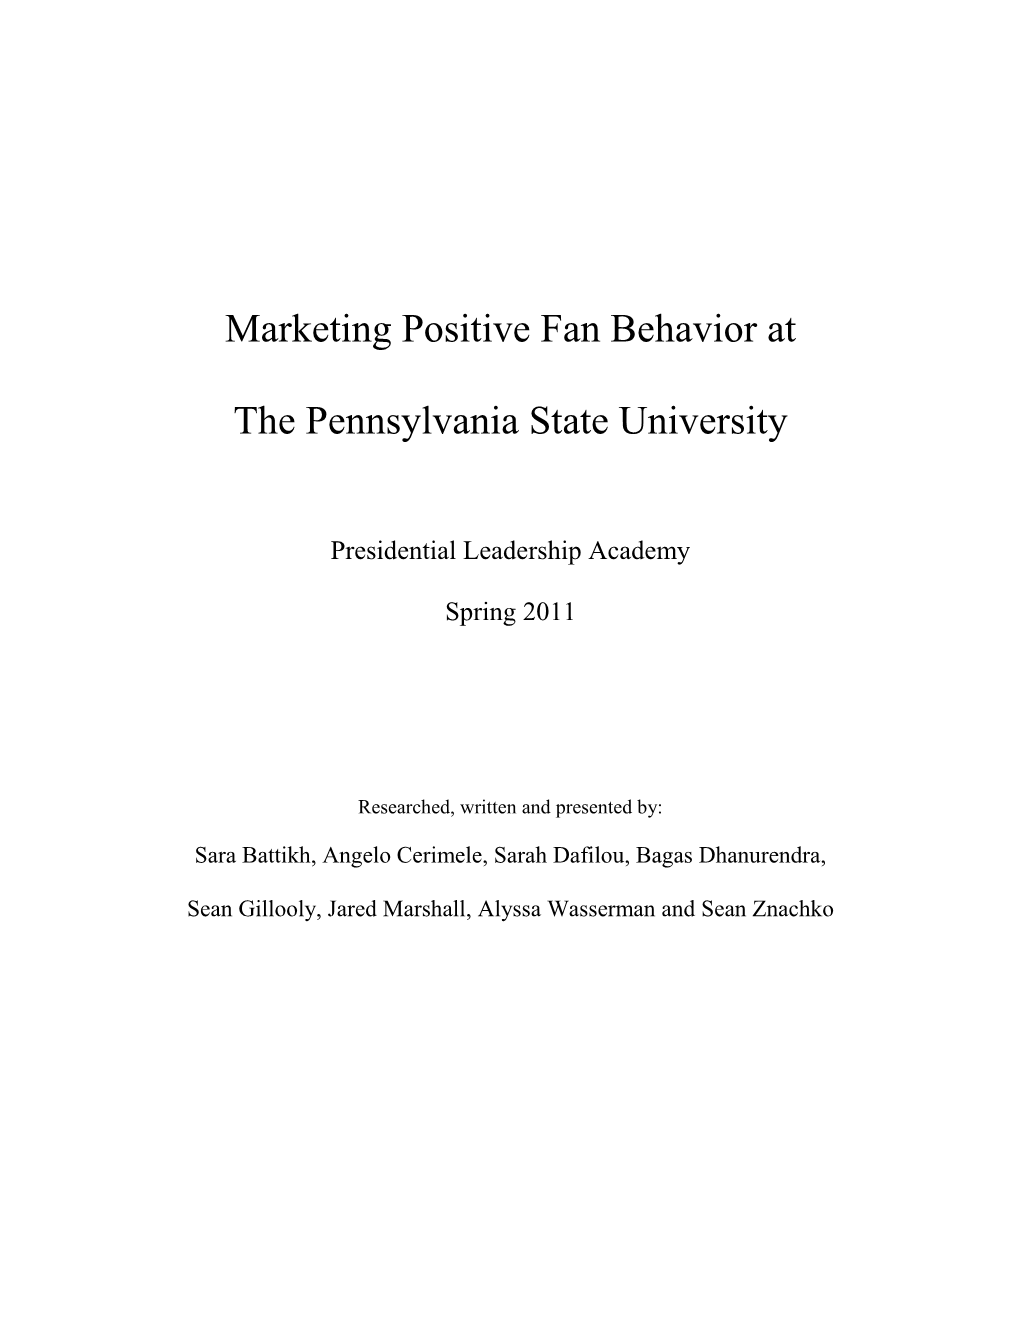 Marketing Positive Fan Behavior at the Pennsylvania State University